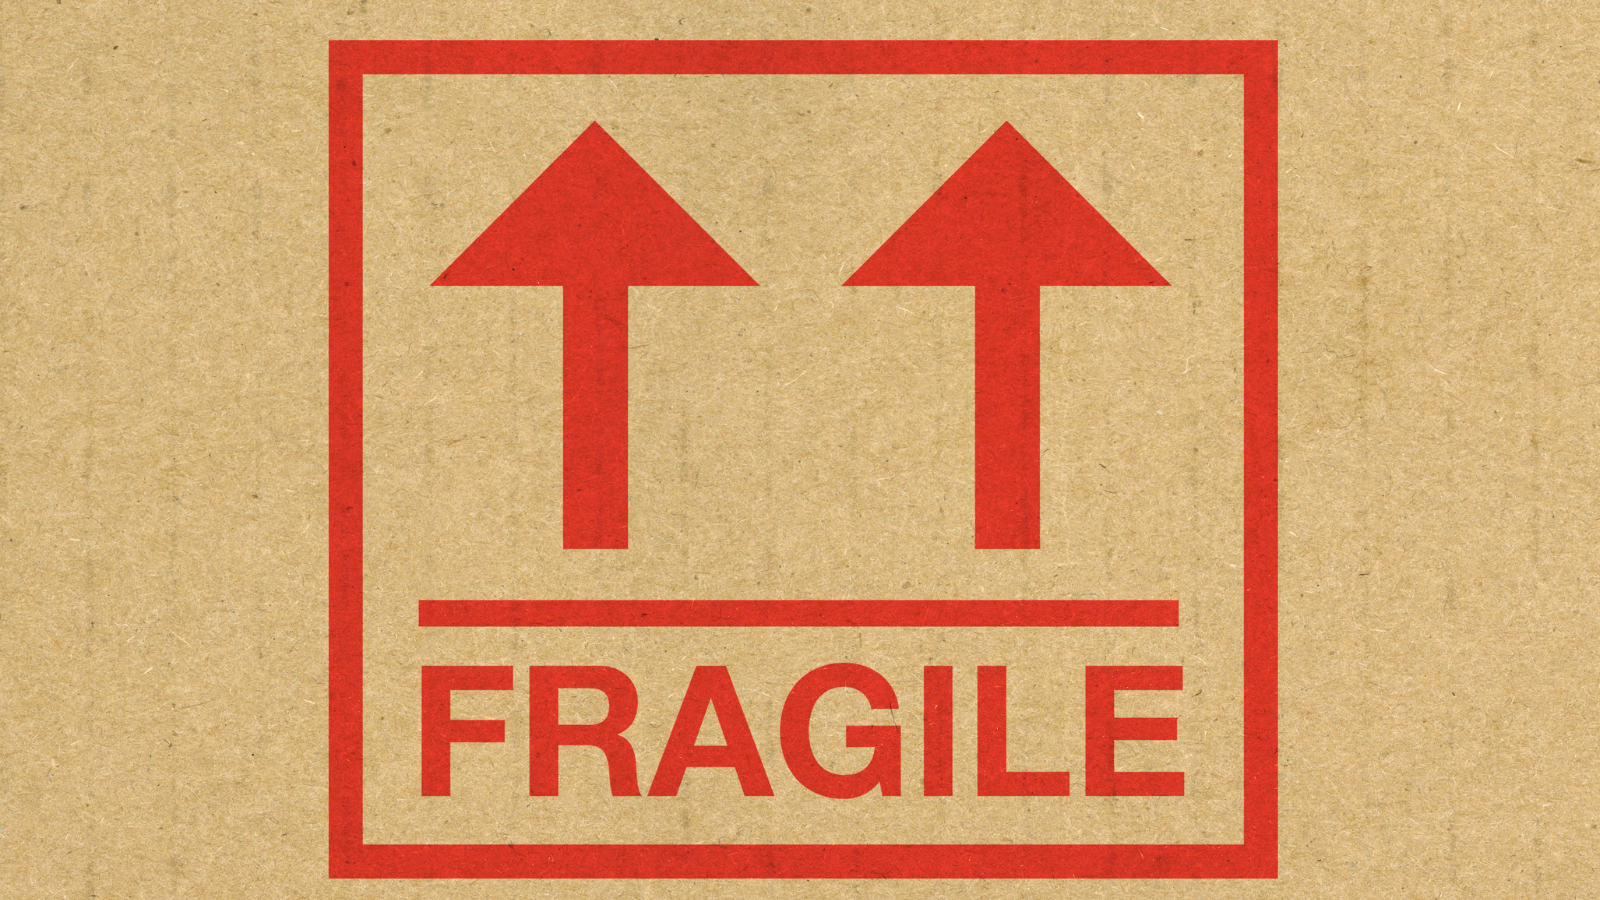 Fragile box label